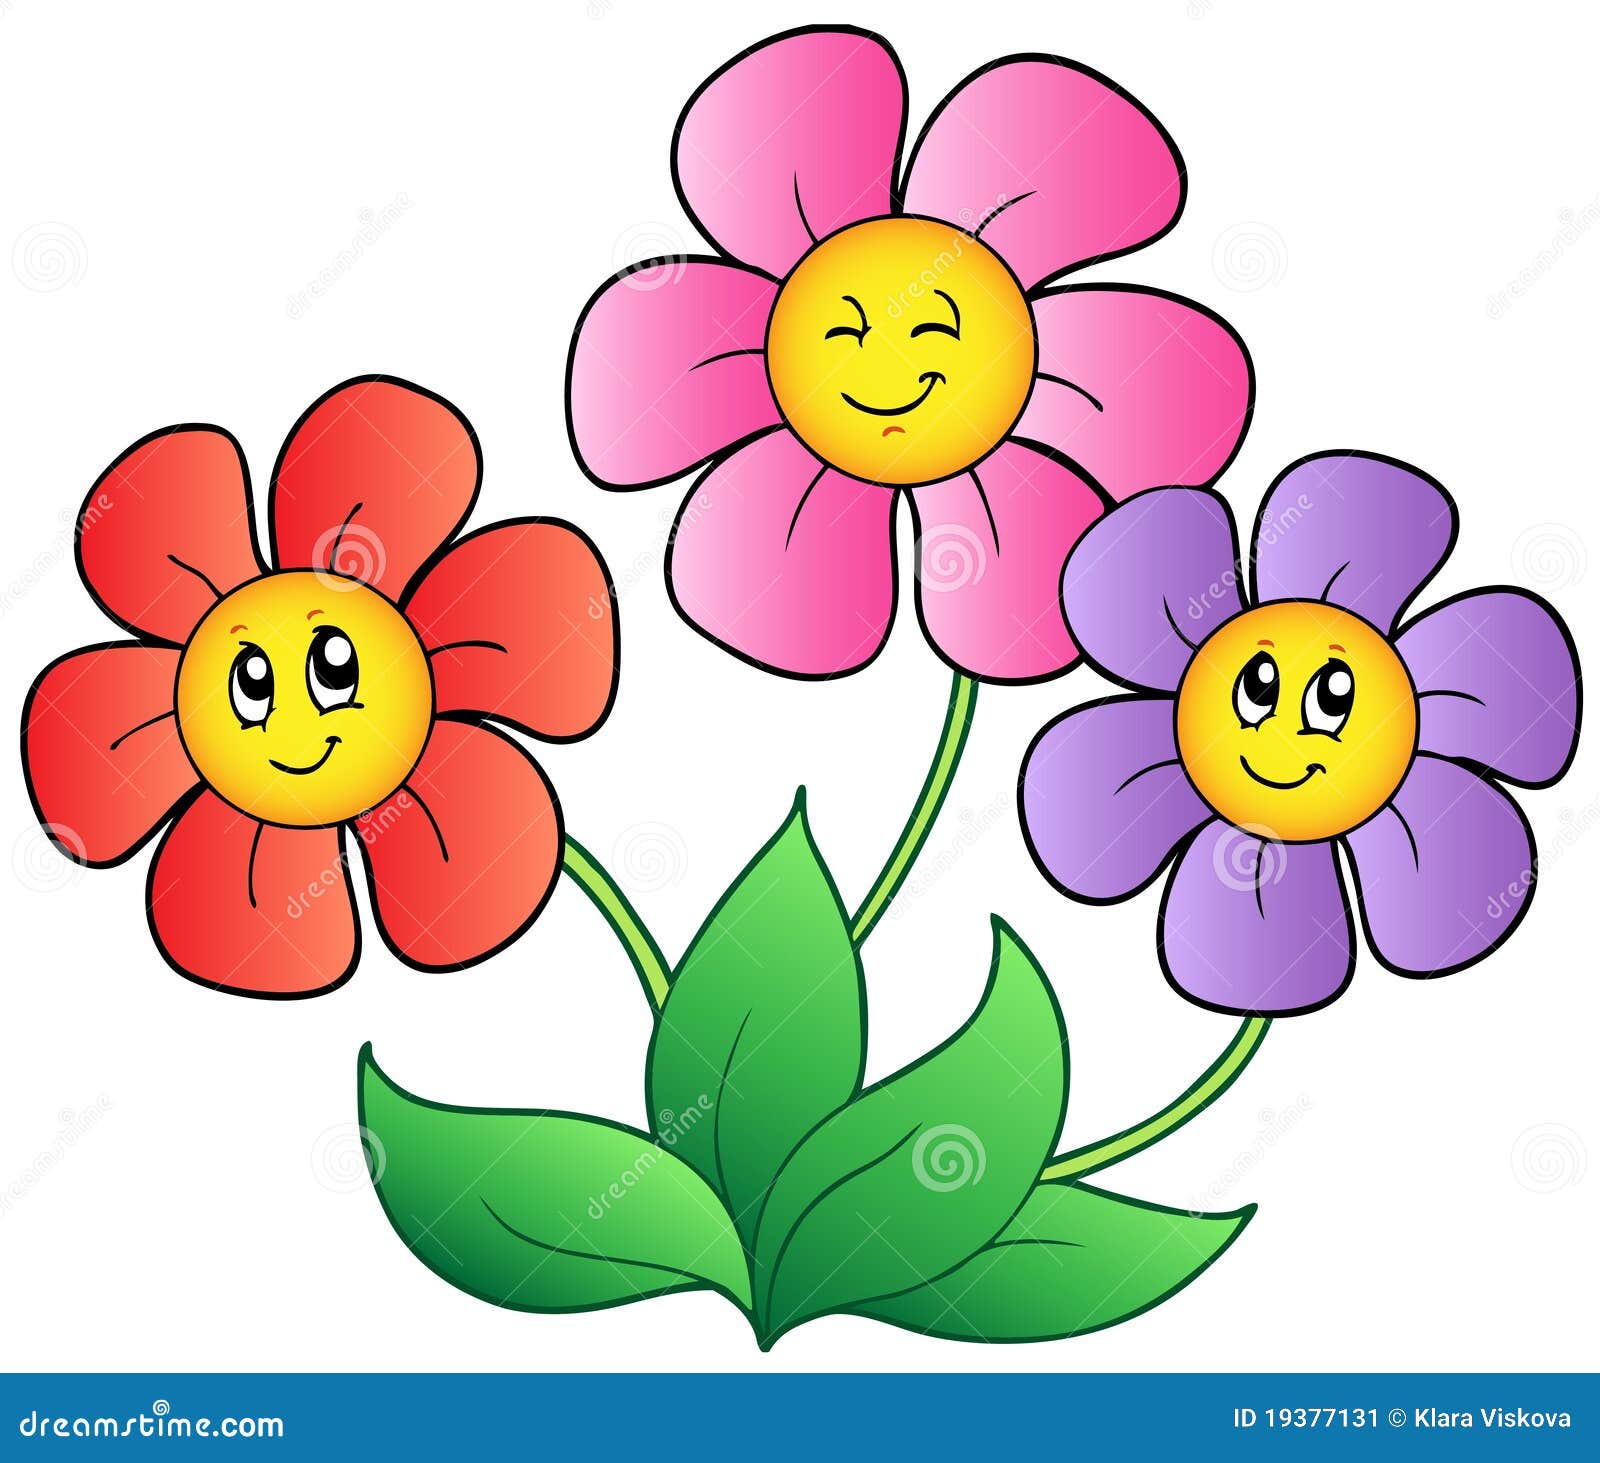 three cartoon flowers